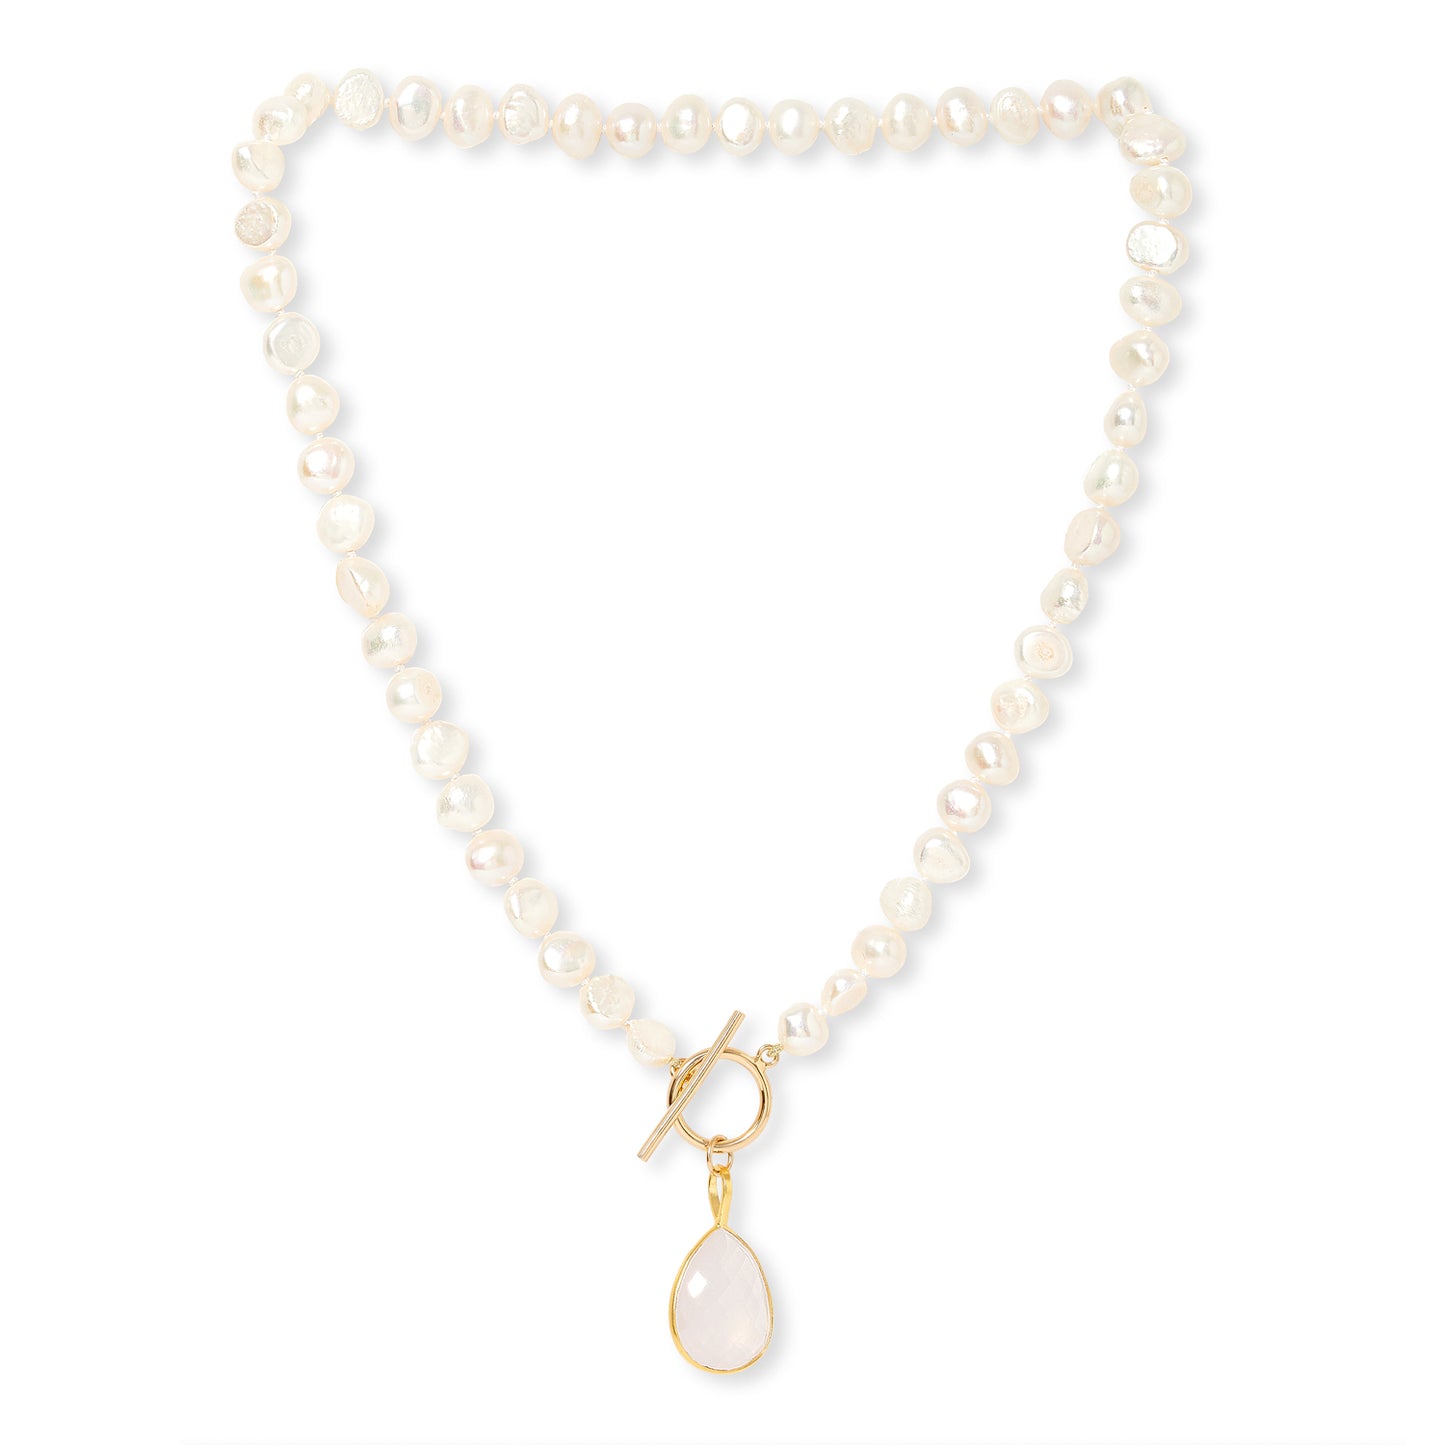 Clara cultured irregular freshwater pearl necklace with rose quartz drop